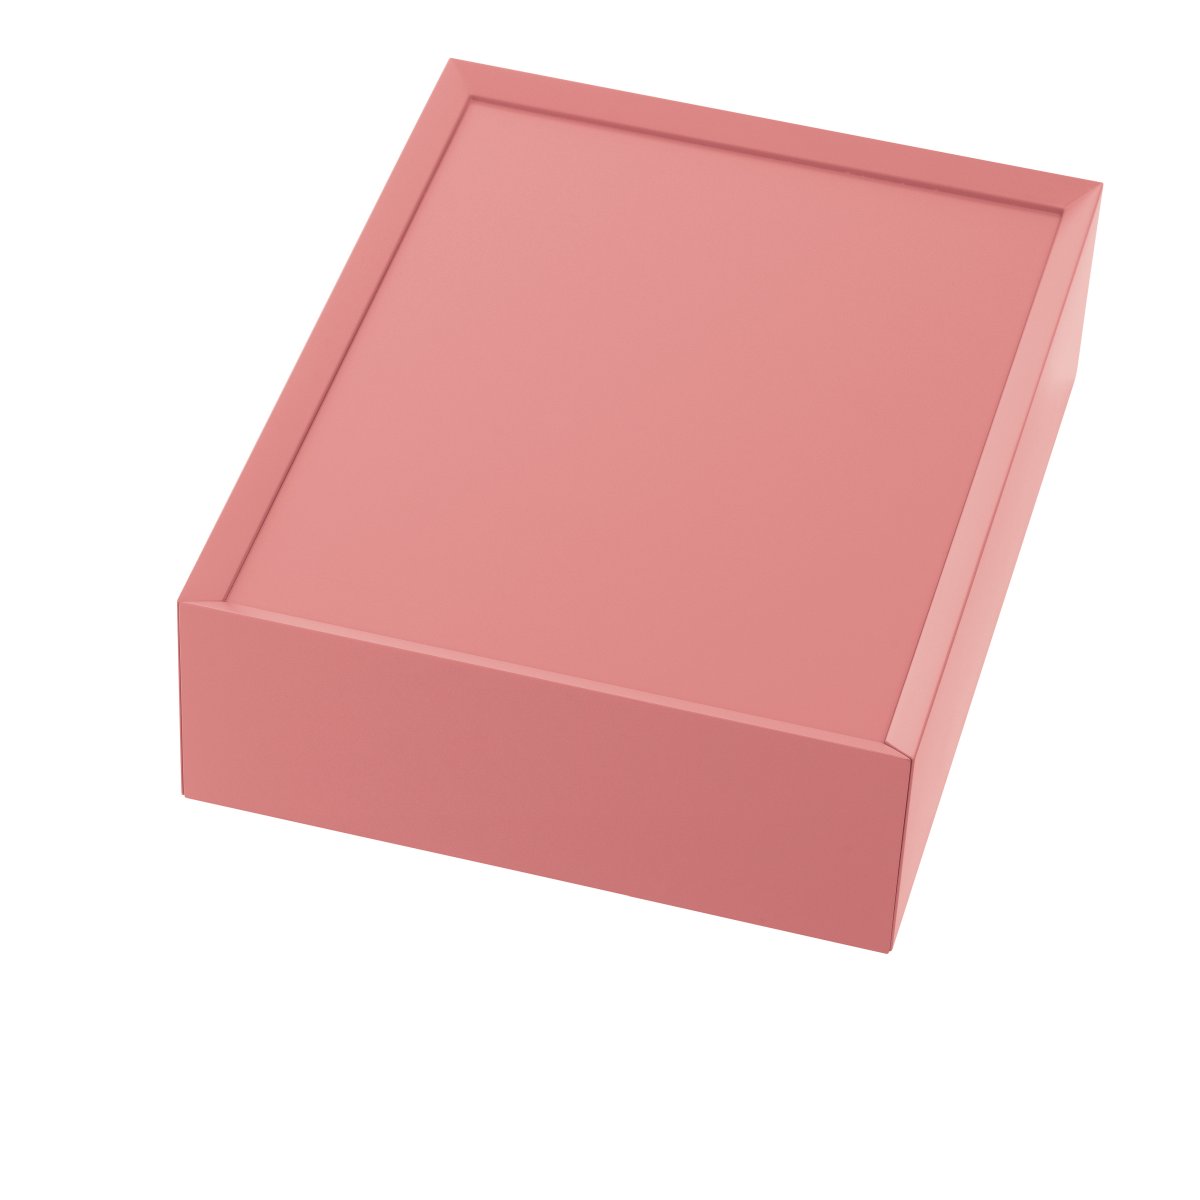 SOUVENIR Schubkastenbox klein flamingo pink (38), geschlossen